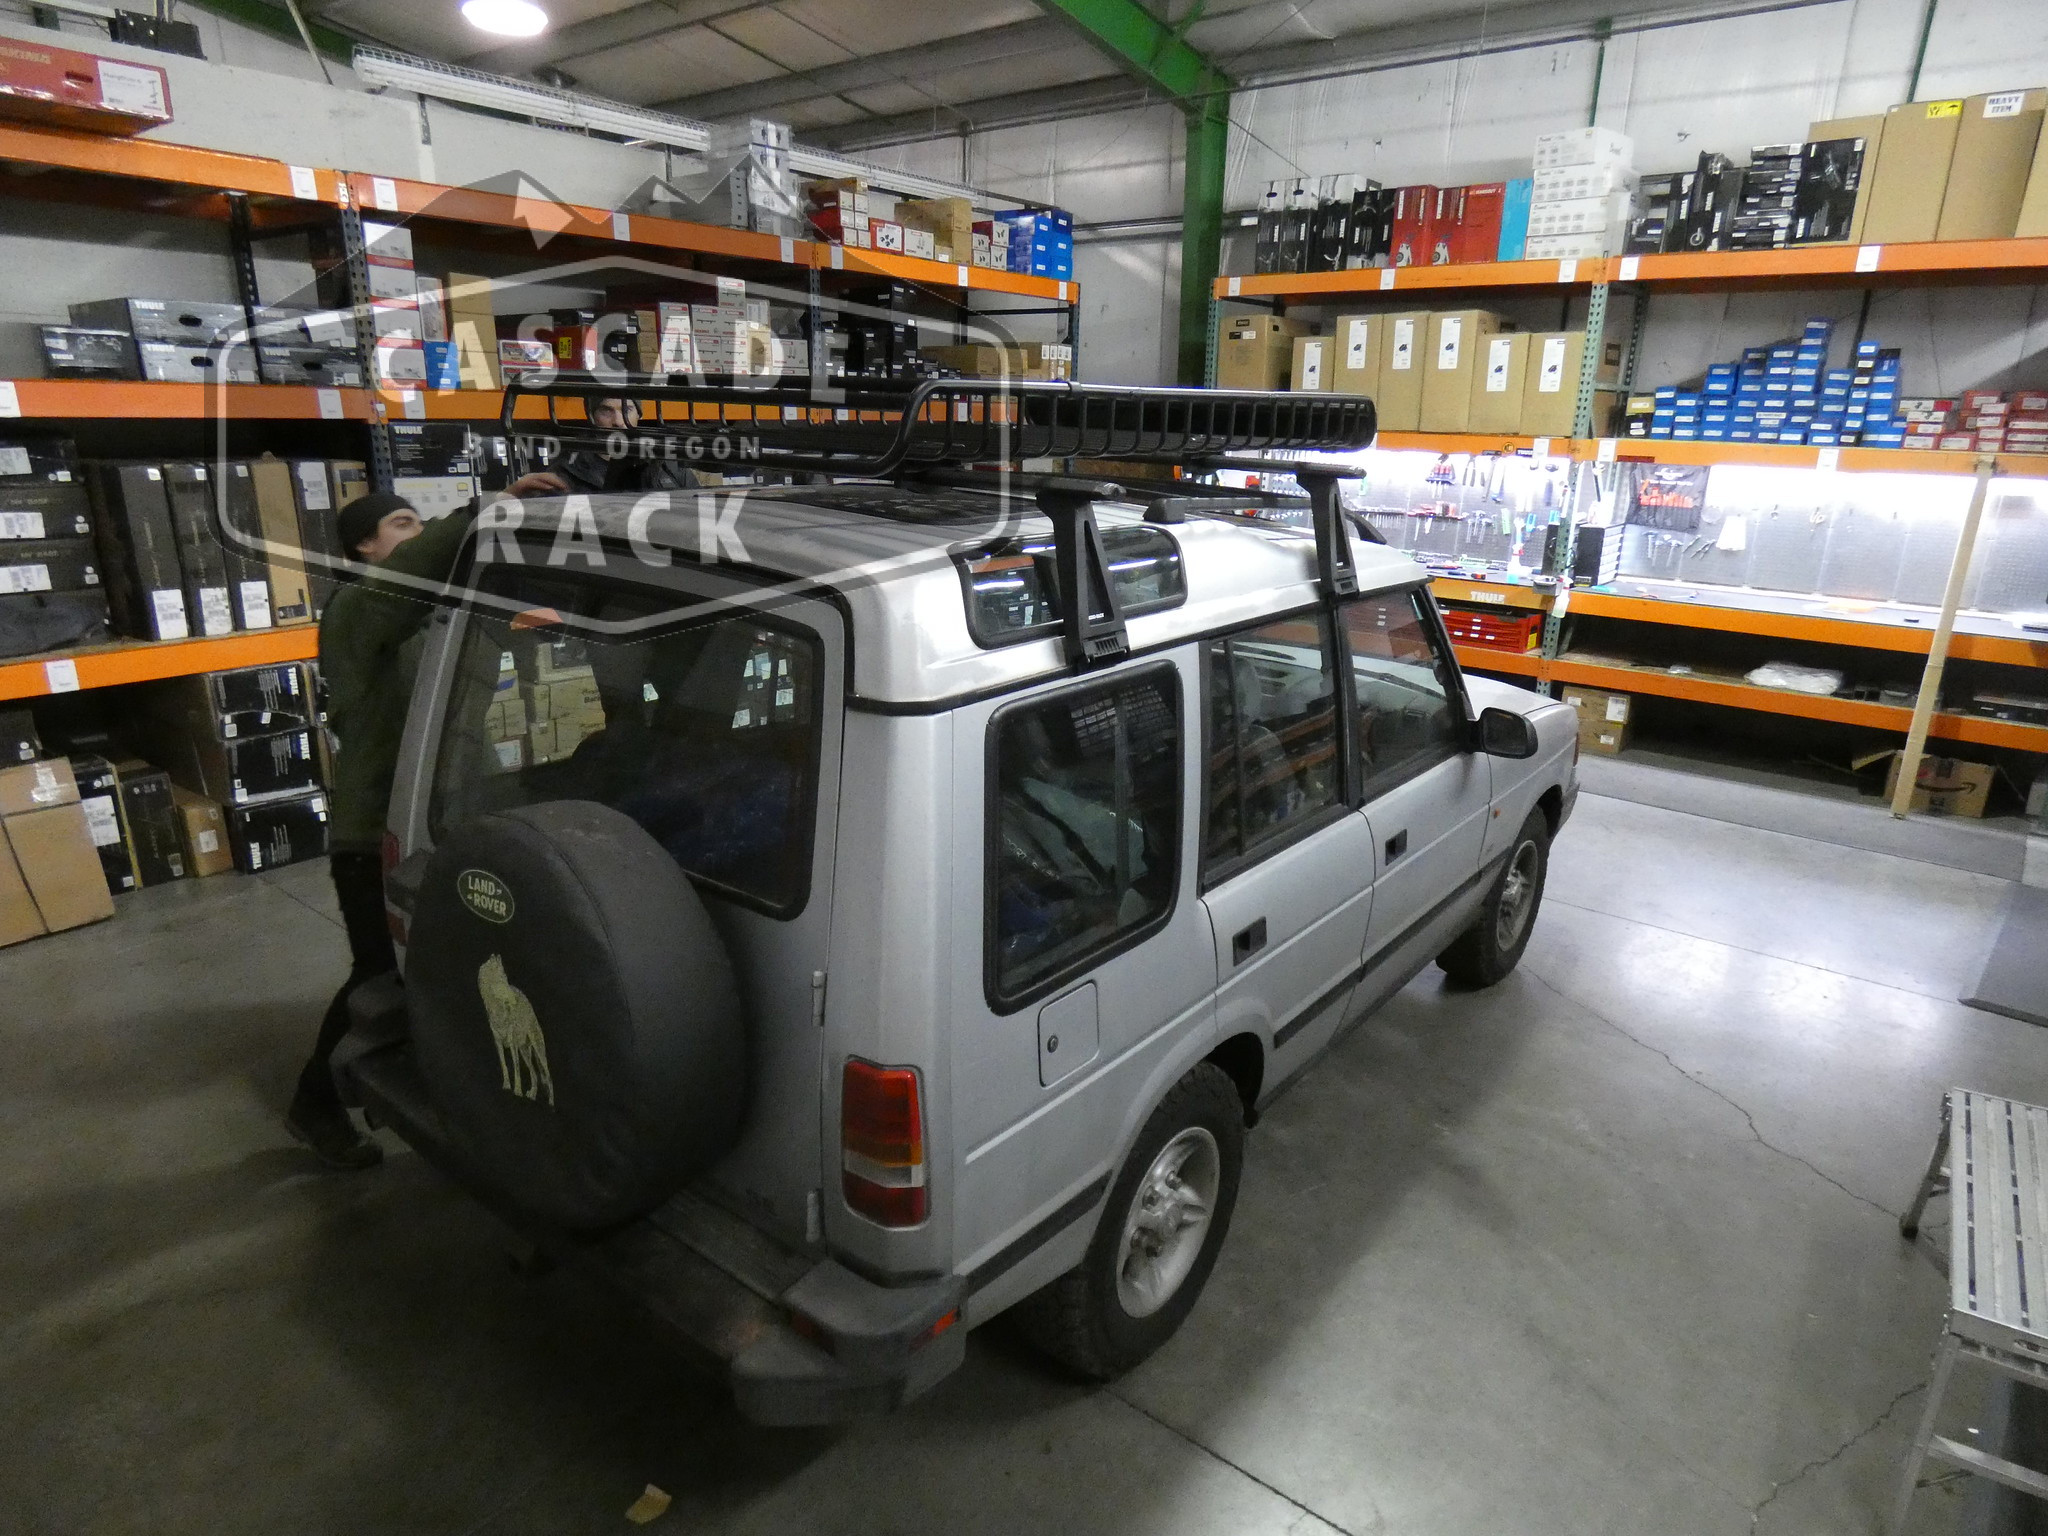 1997 Land Rover Discovery - Roof Rack and Cargo Basket - Rhino Rack / Yakima